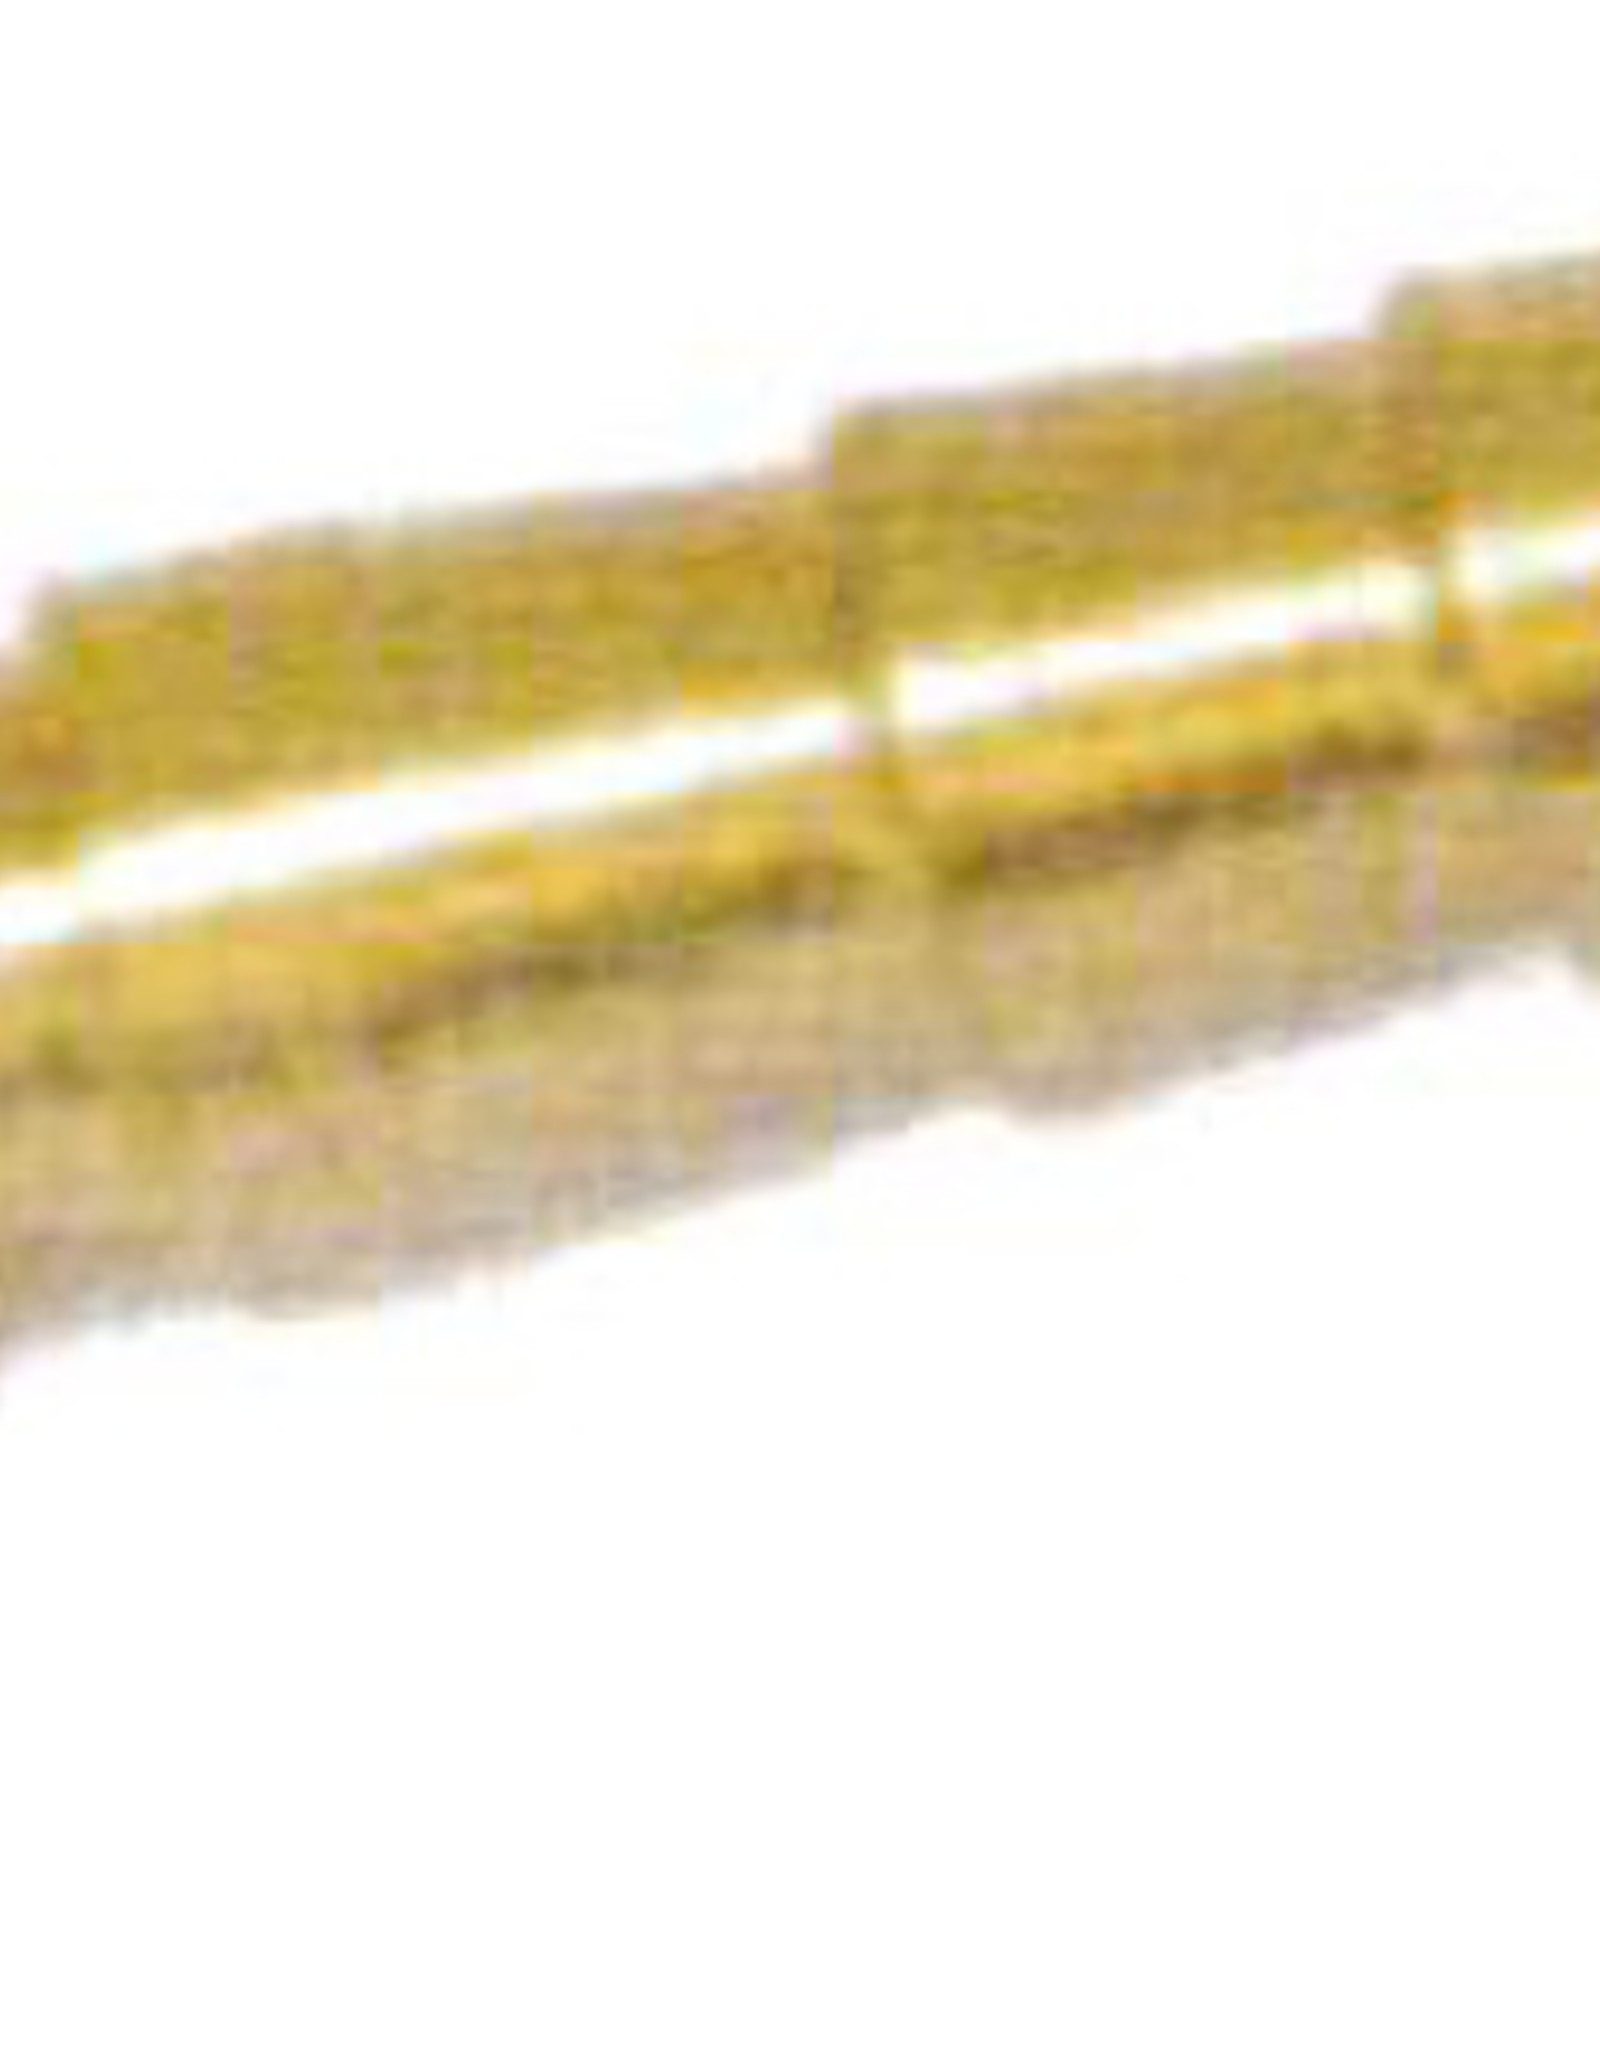 Clarks Hydraulic Workshop Refill Shimano Needles (10's)